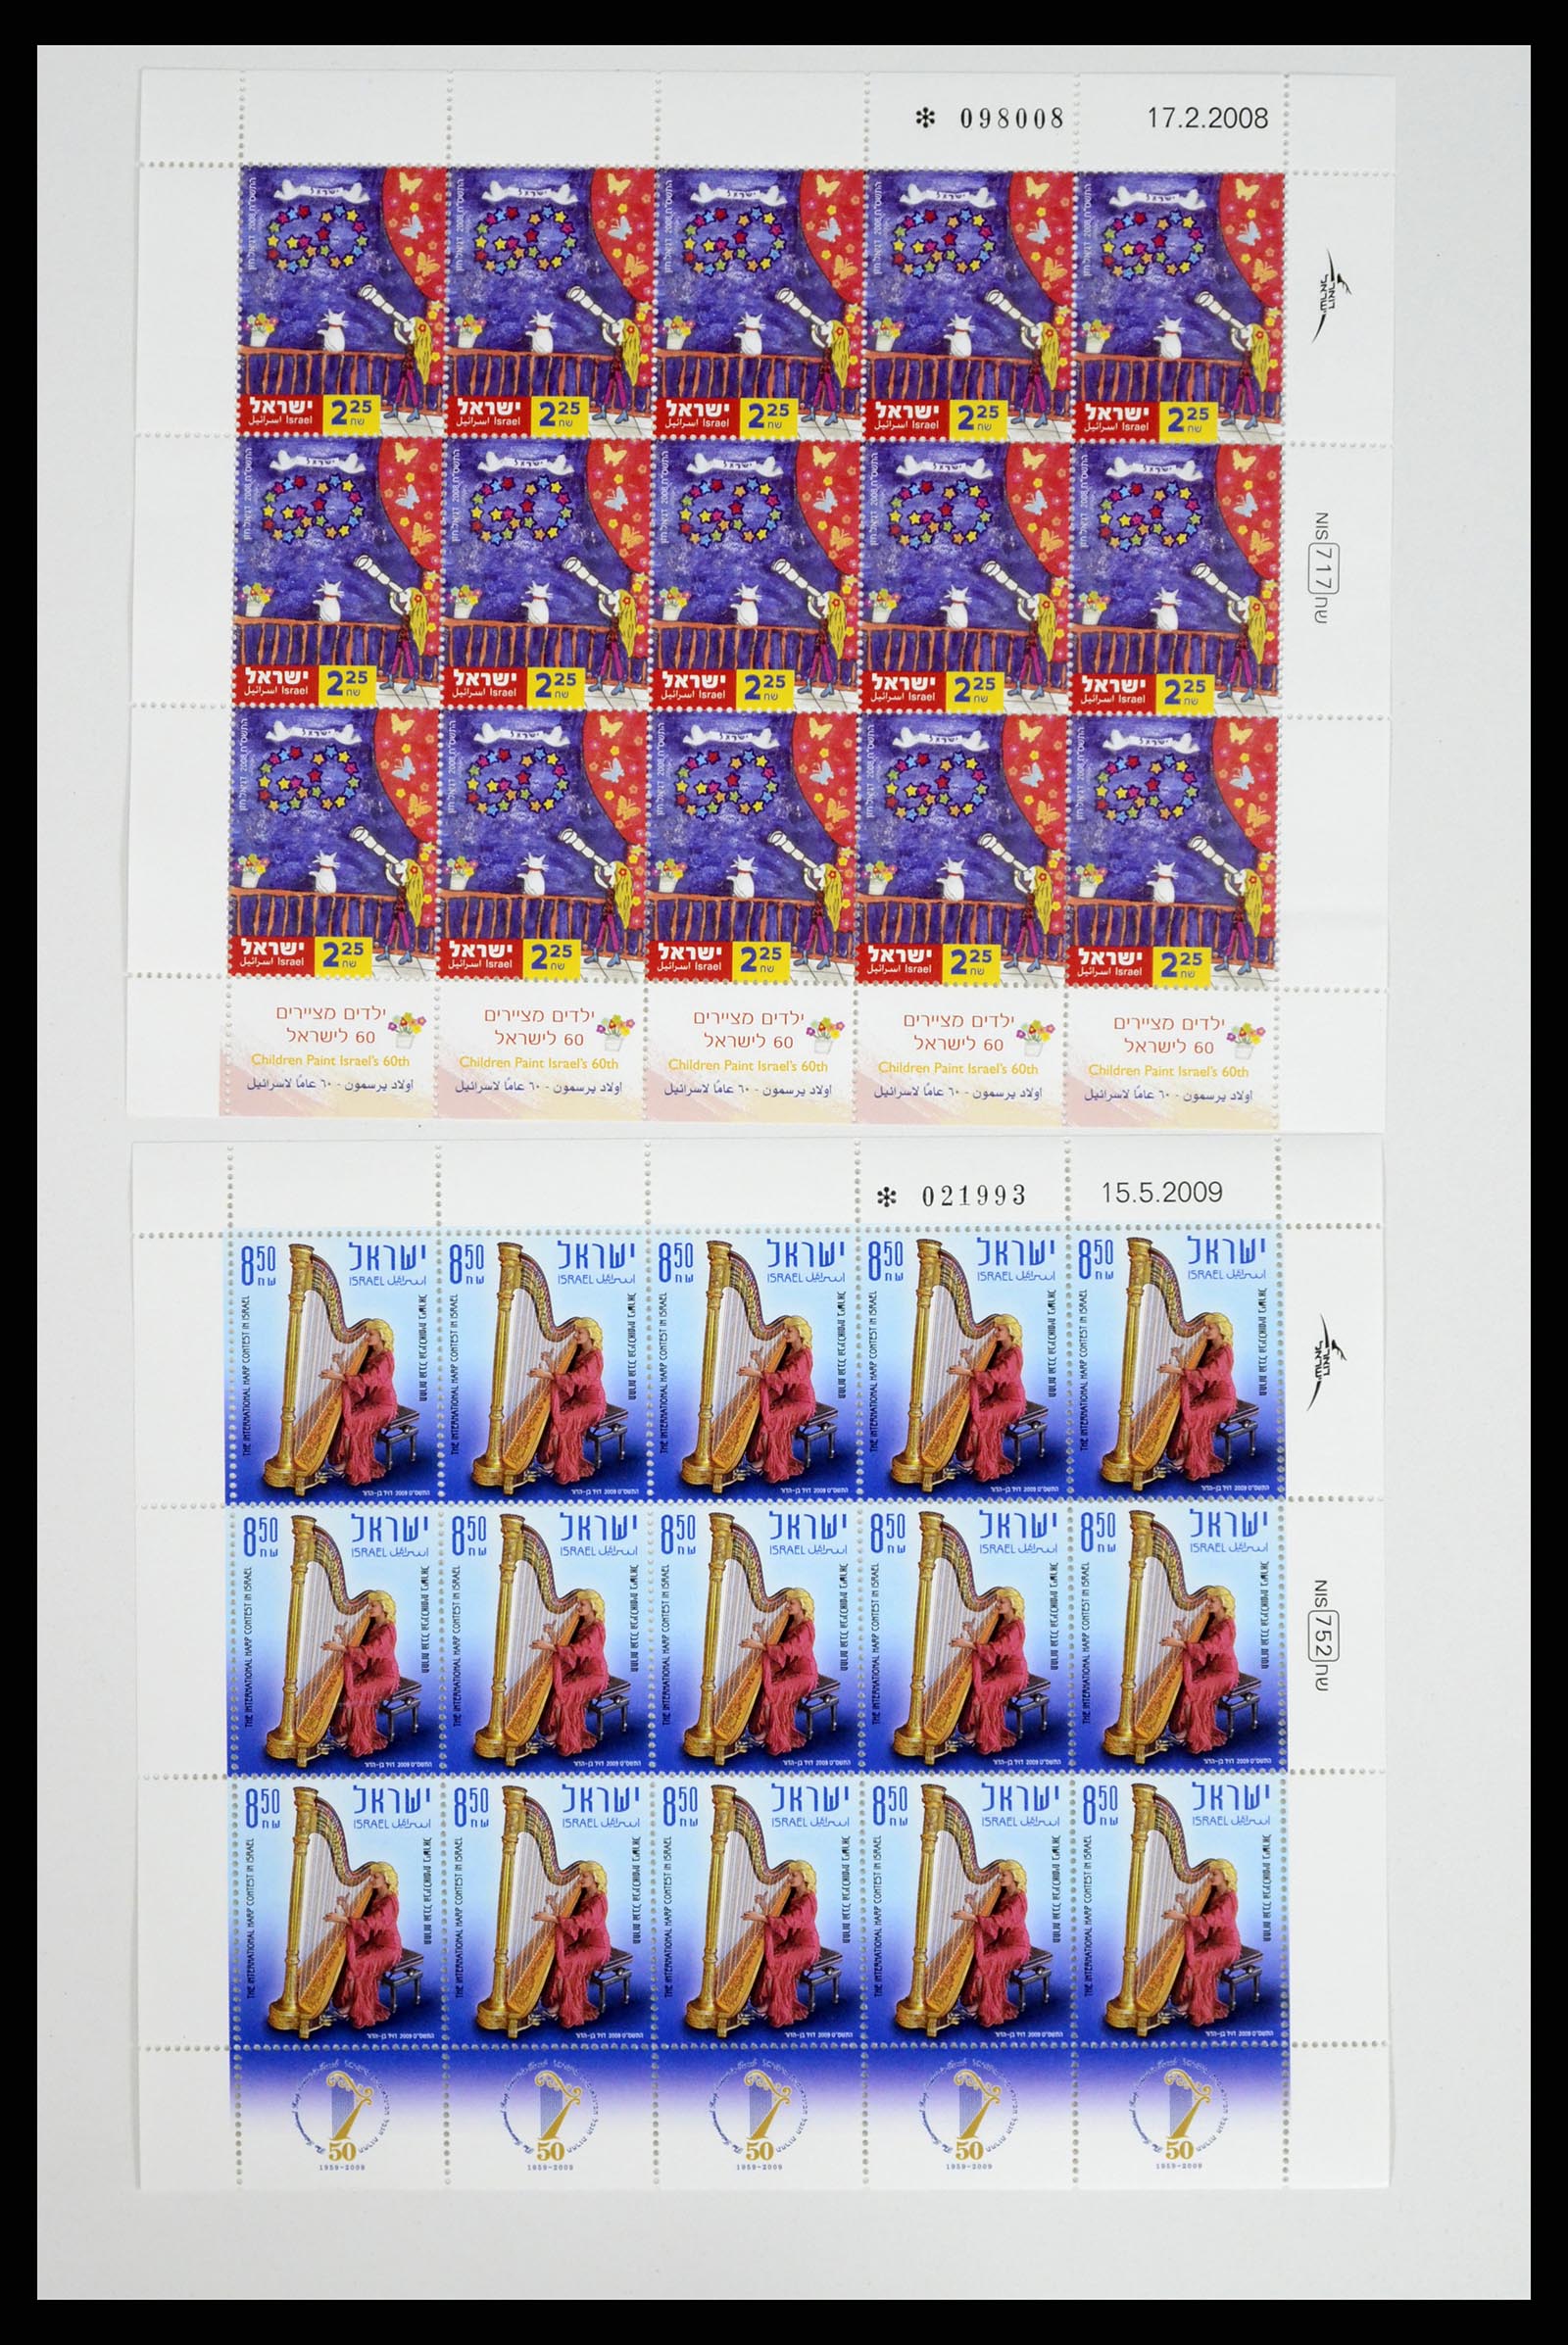 37779 085 - Stamp collection 37779 Israel sheetlets 1986-2009.